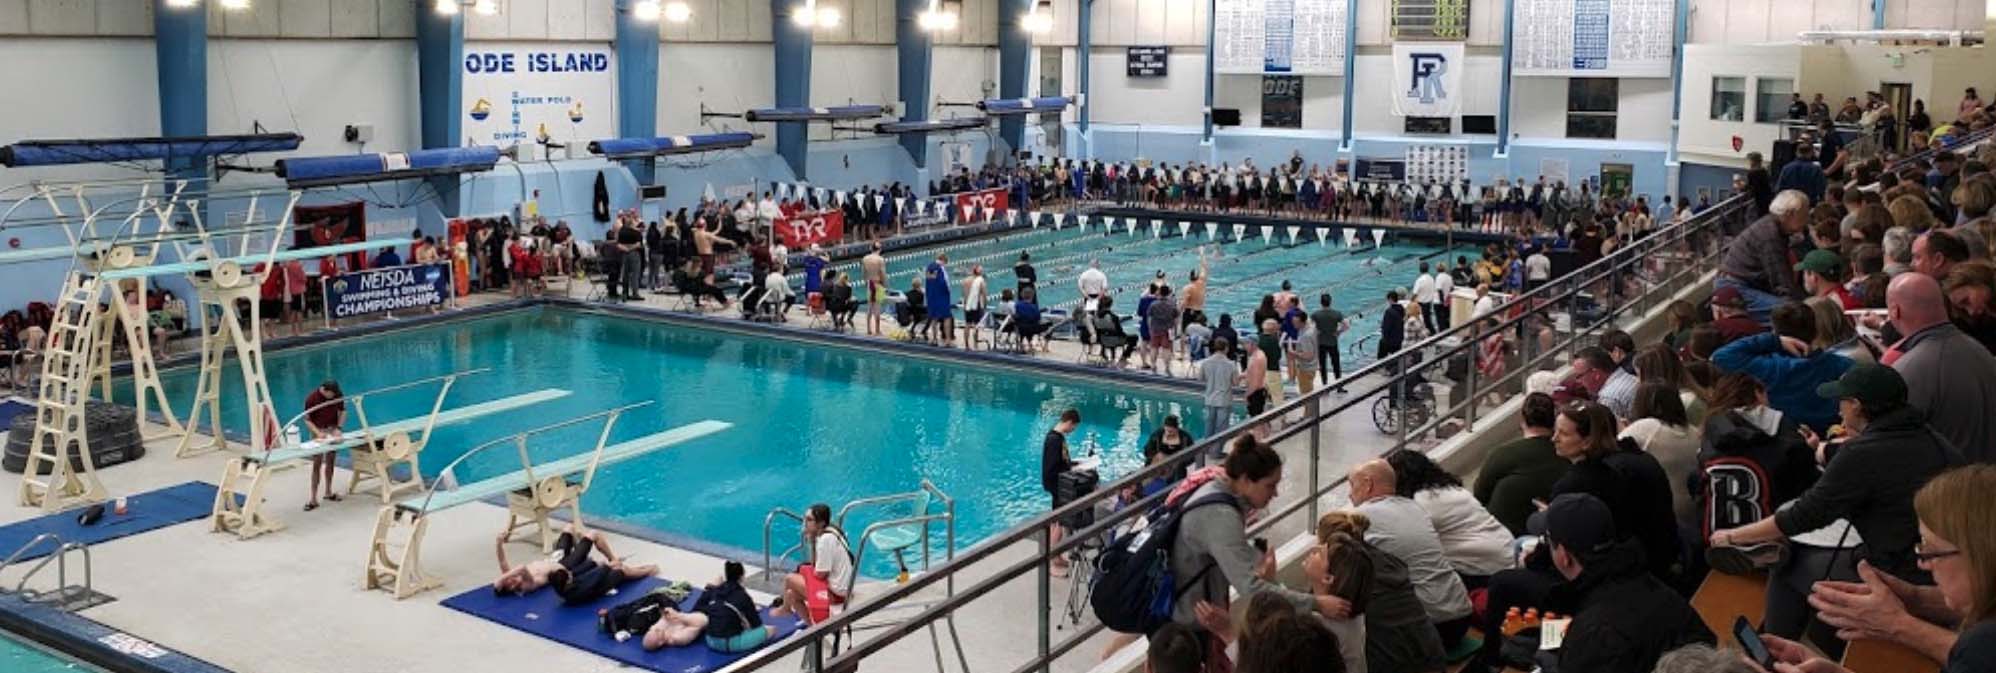 University of Rhode Island Aquatics pool